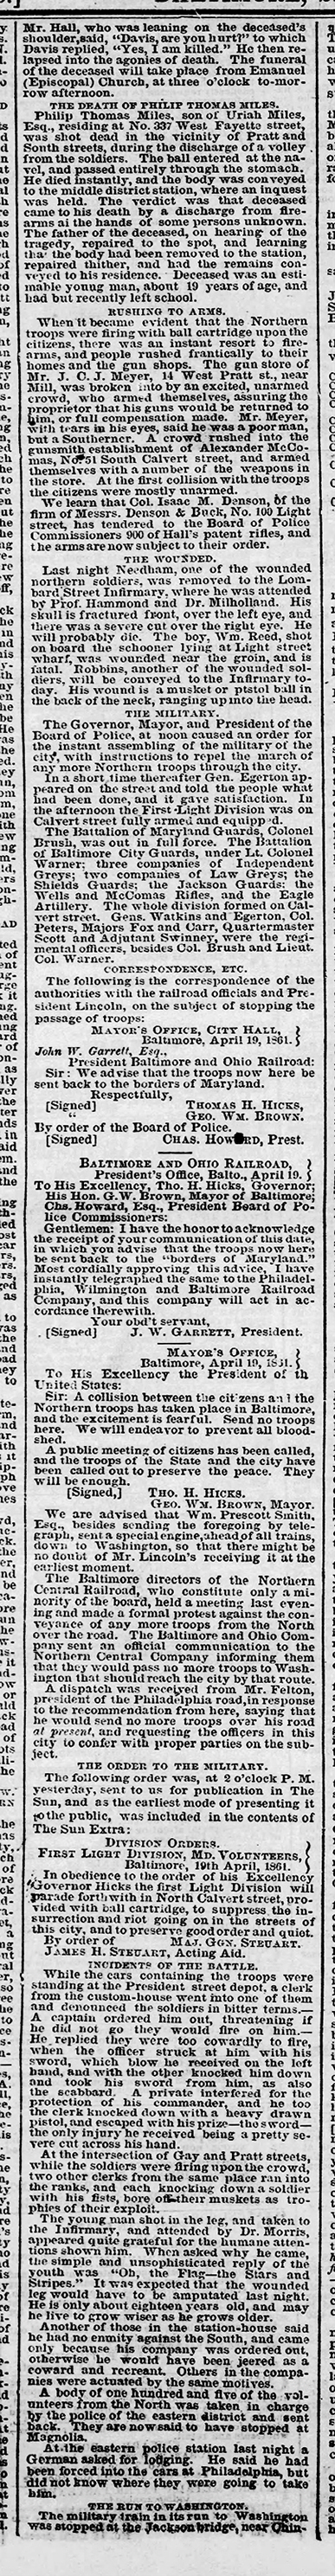 The Baltimore Sun Sat Apr 20 1861 372